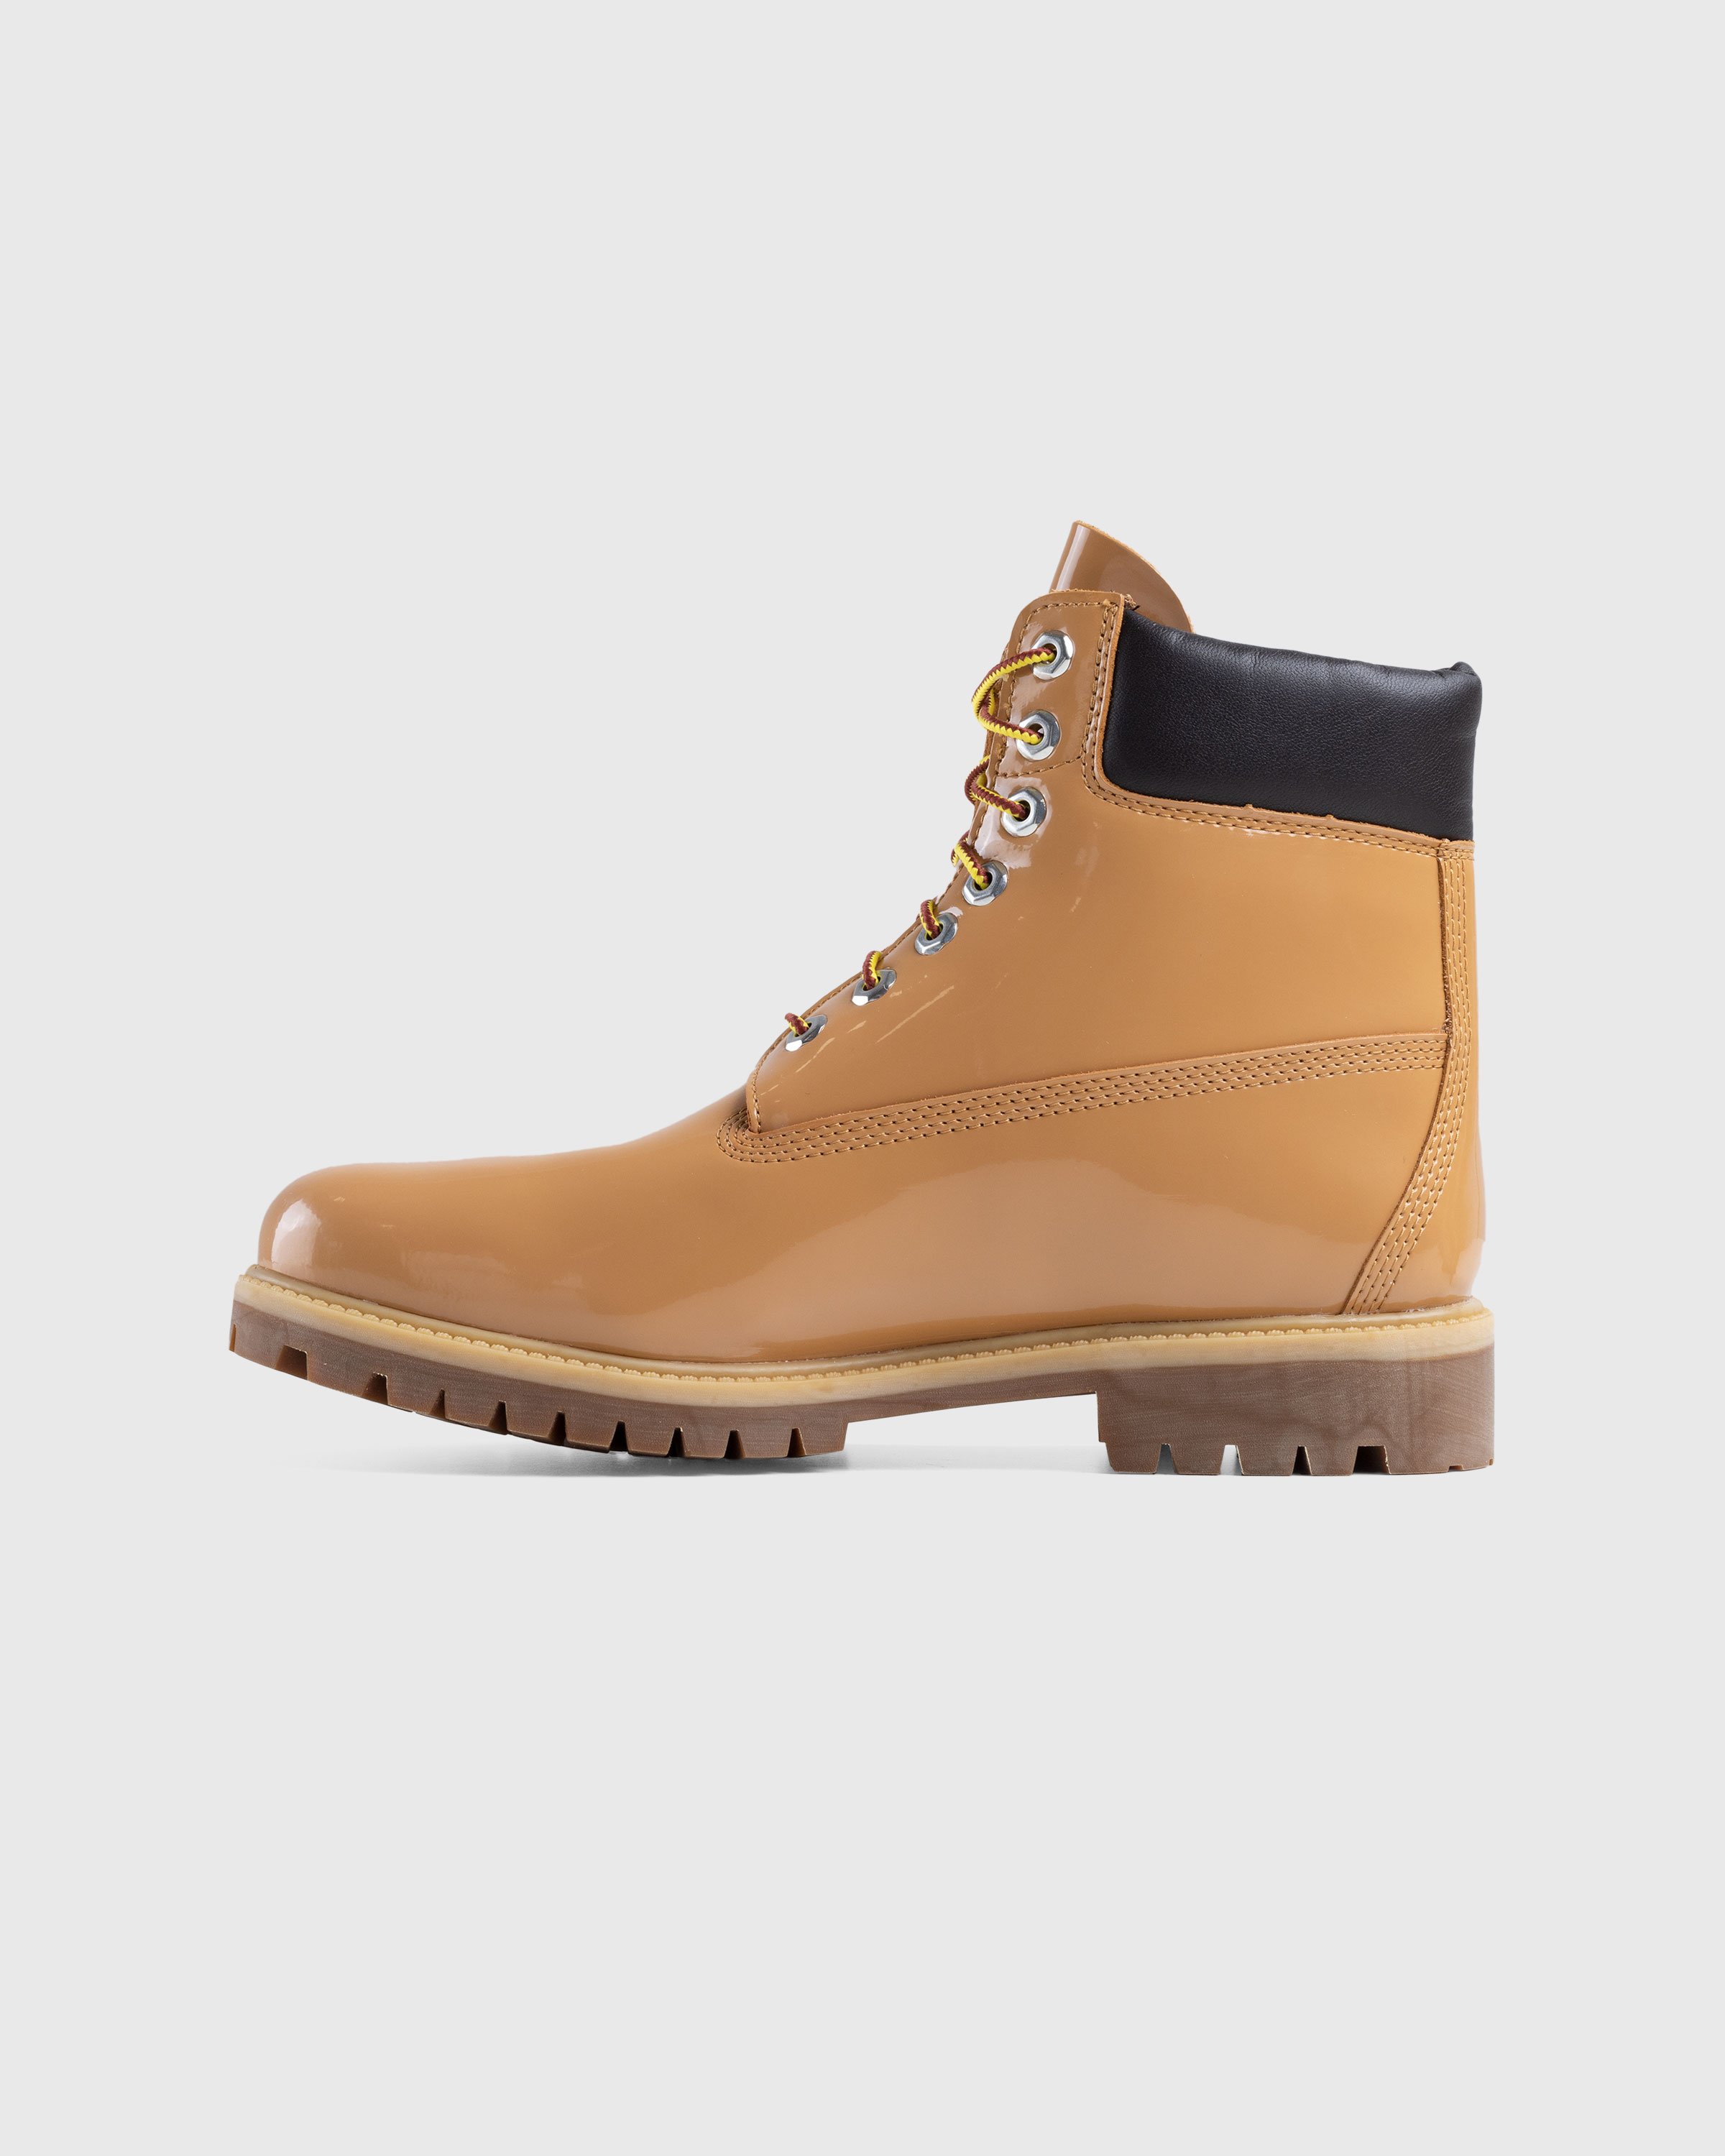 Veneda Carter x Timberland - 6" Patent Leather Boot - Footwear - Brown - Image 2